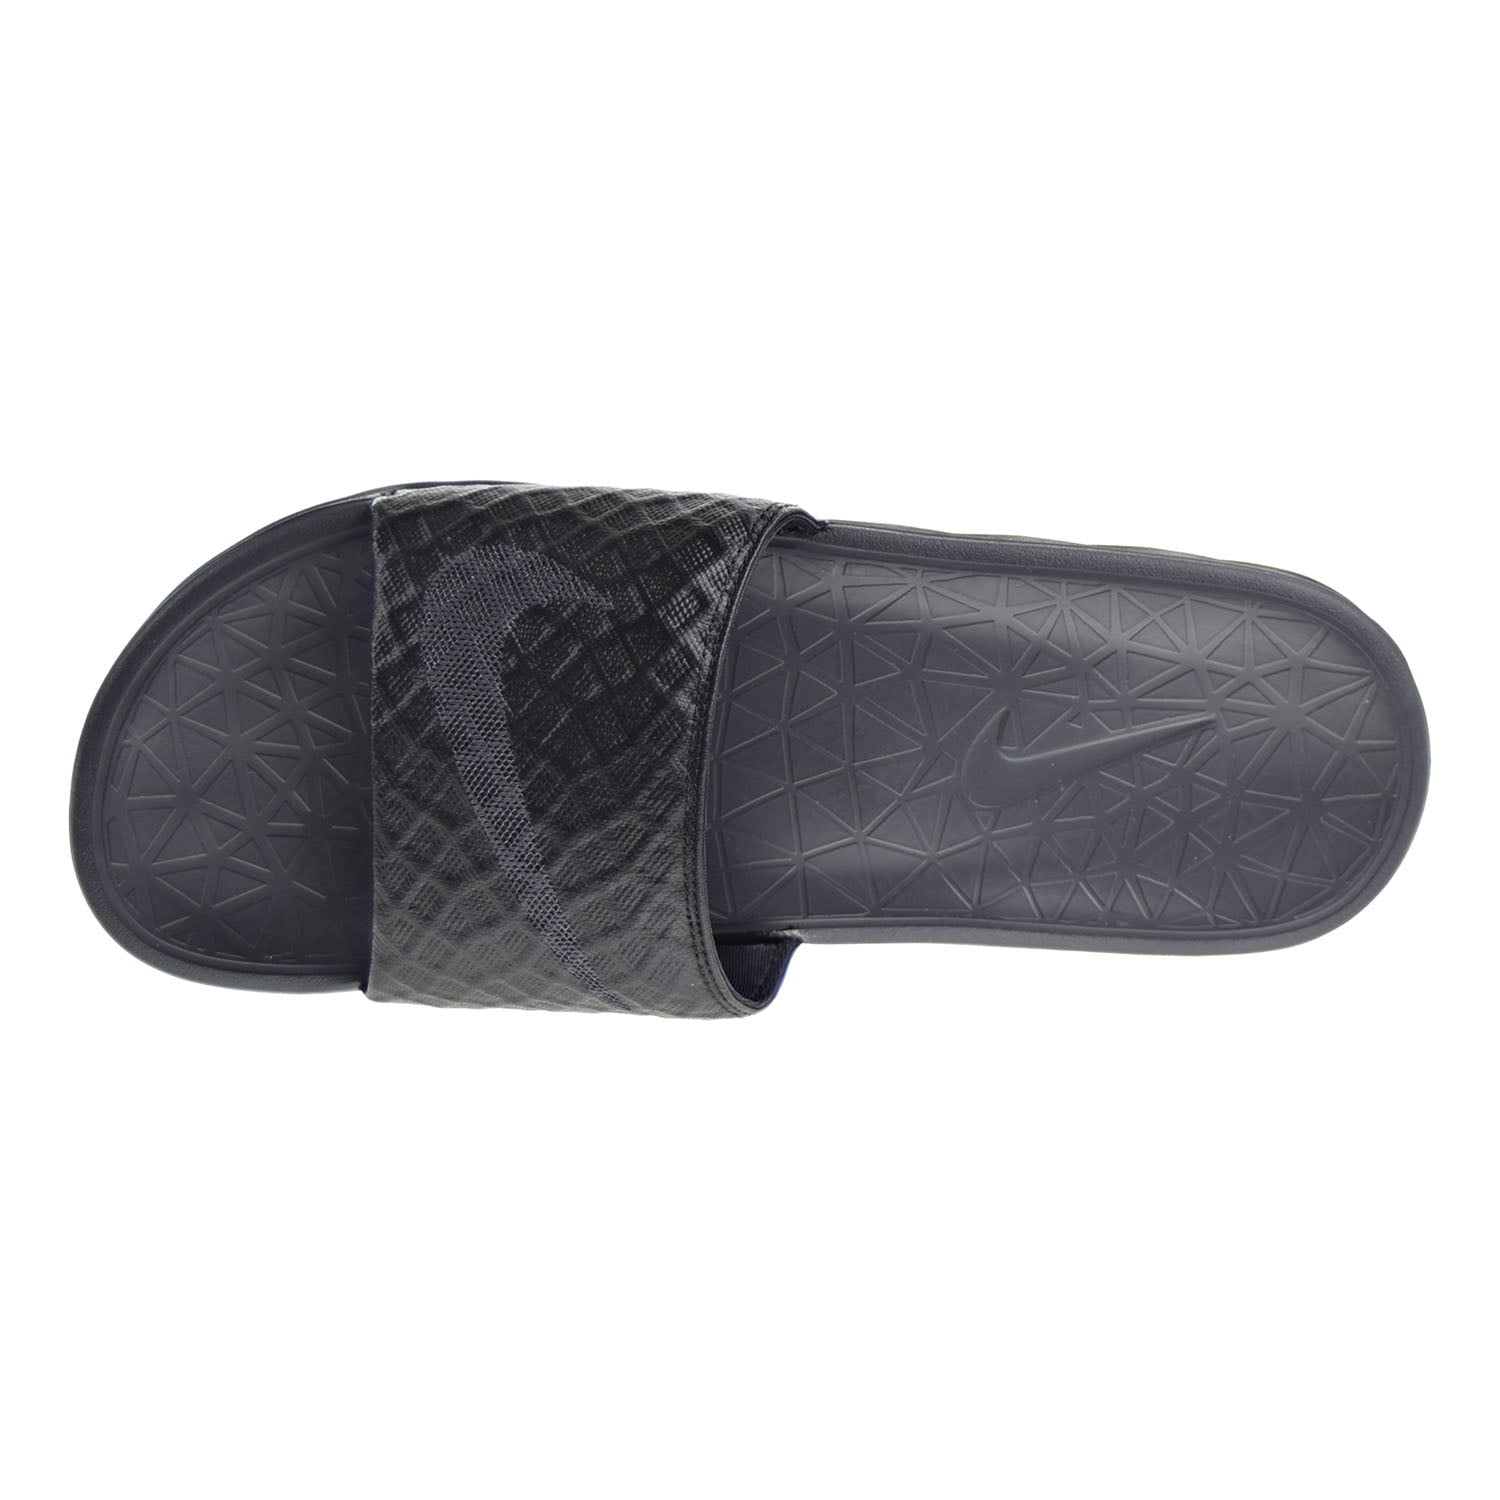 Nike Men's Benassi Solarsoft Sandals Black 705474-091 (7 D(M) US